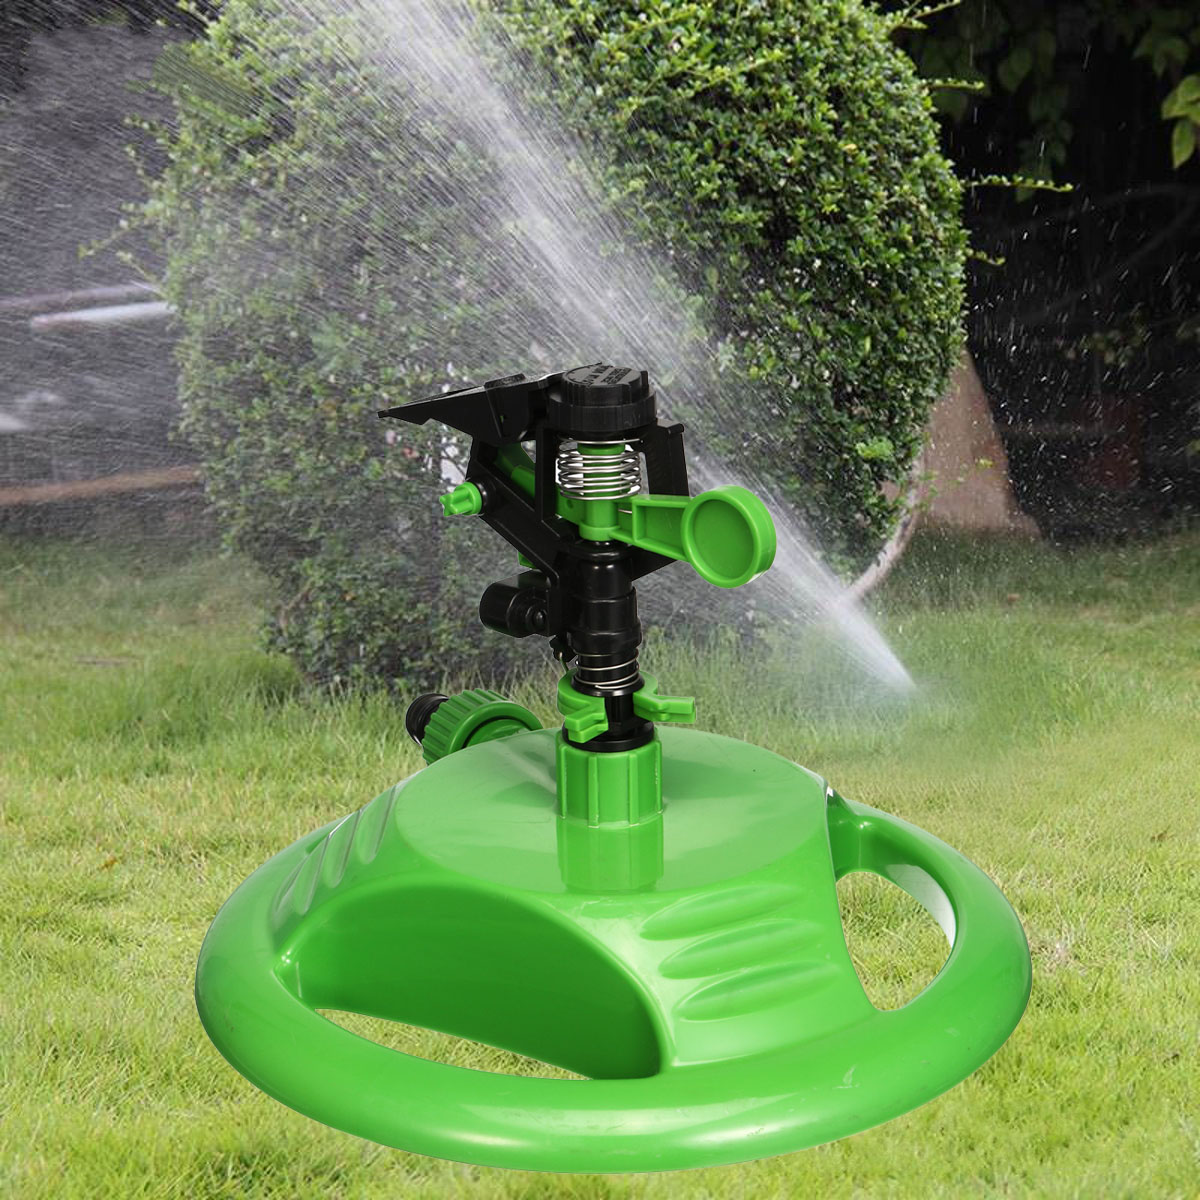 

Garden Yard Rotating Sprinkler Outdoor Lawn Water Spray Watering Irrigation Tool